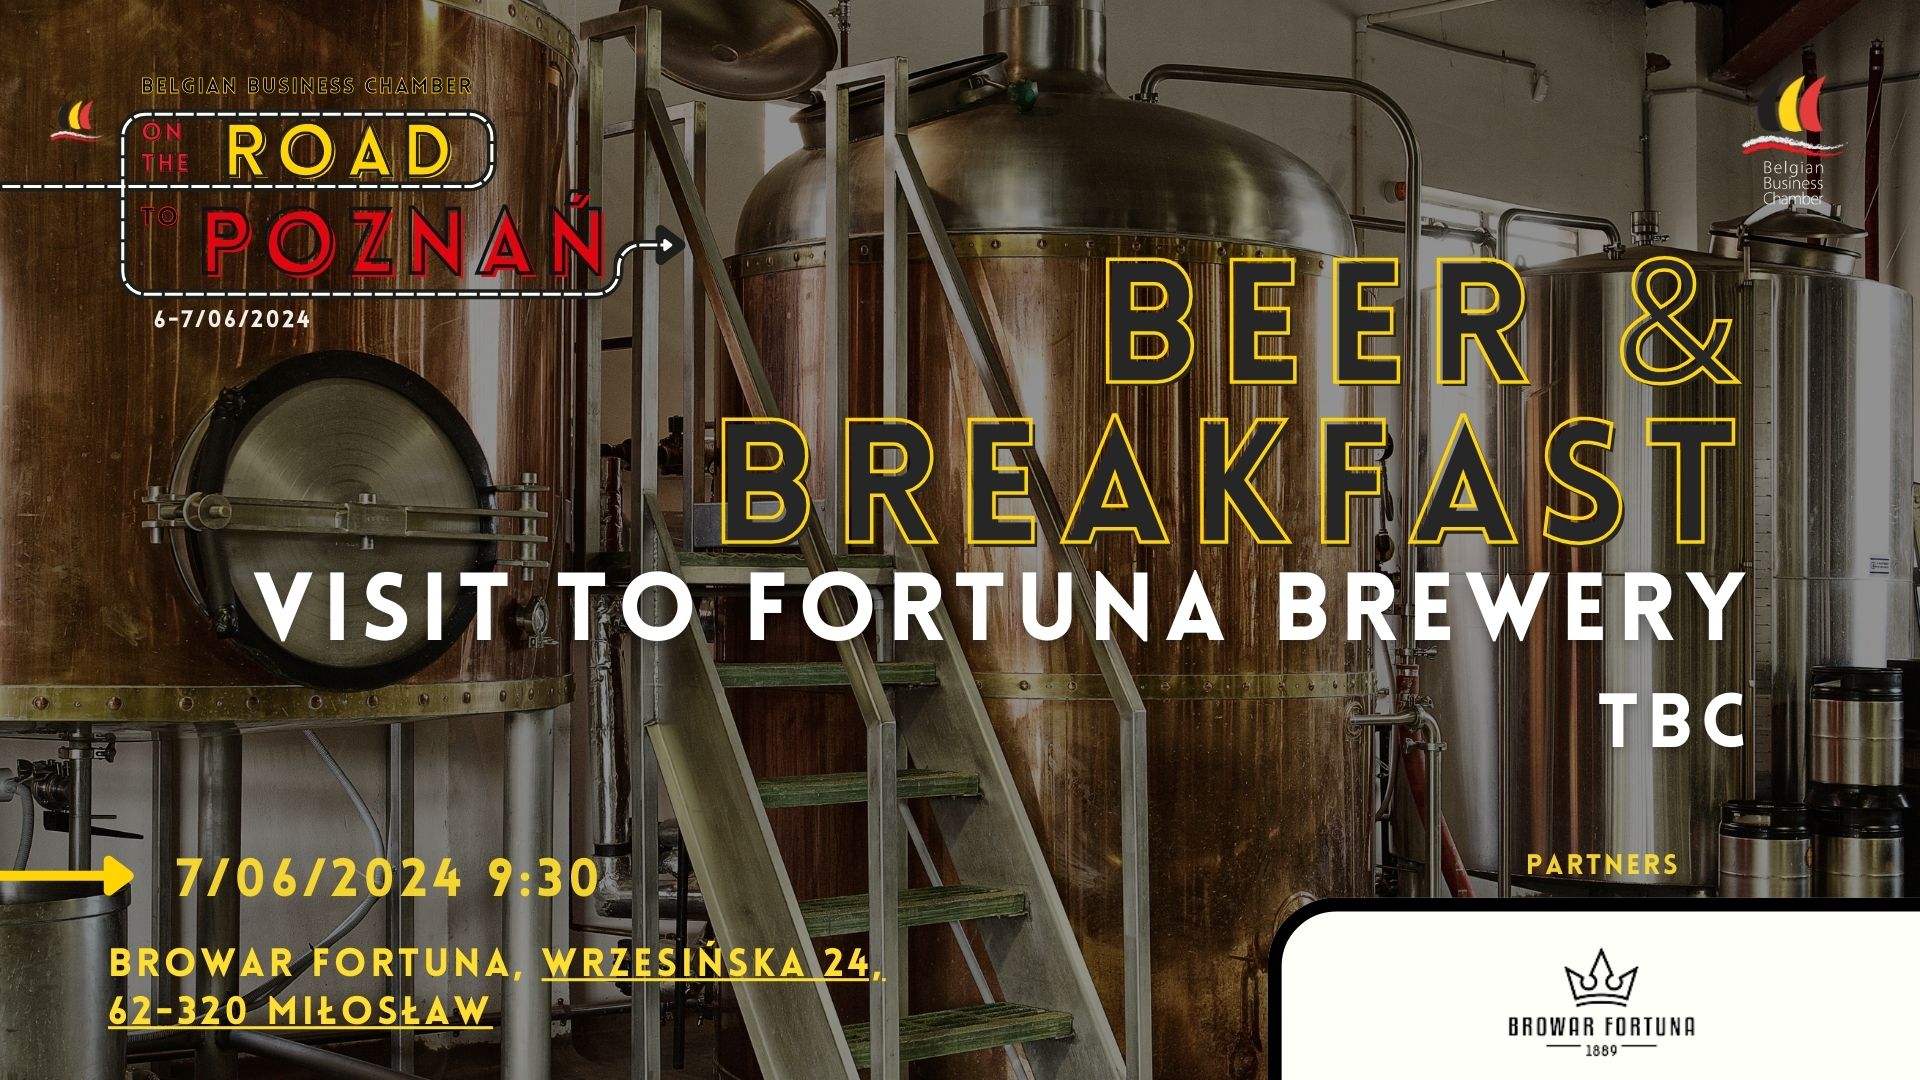 Beer & Breakfast | BBC x PARTNERS | Poznań